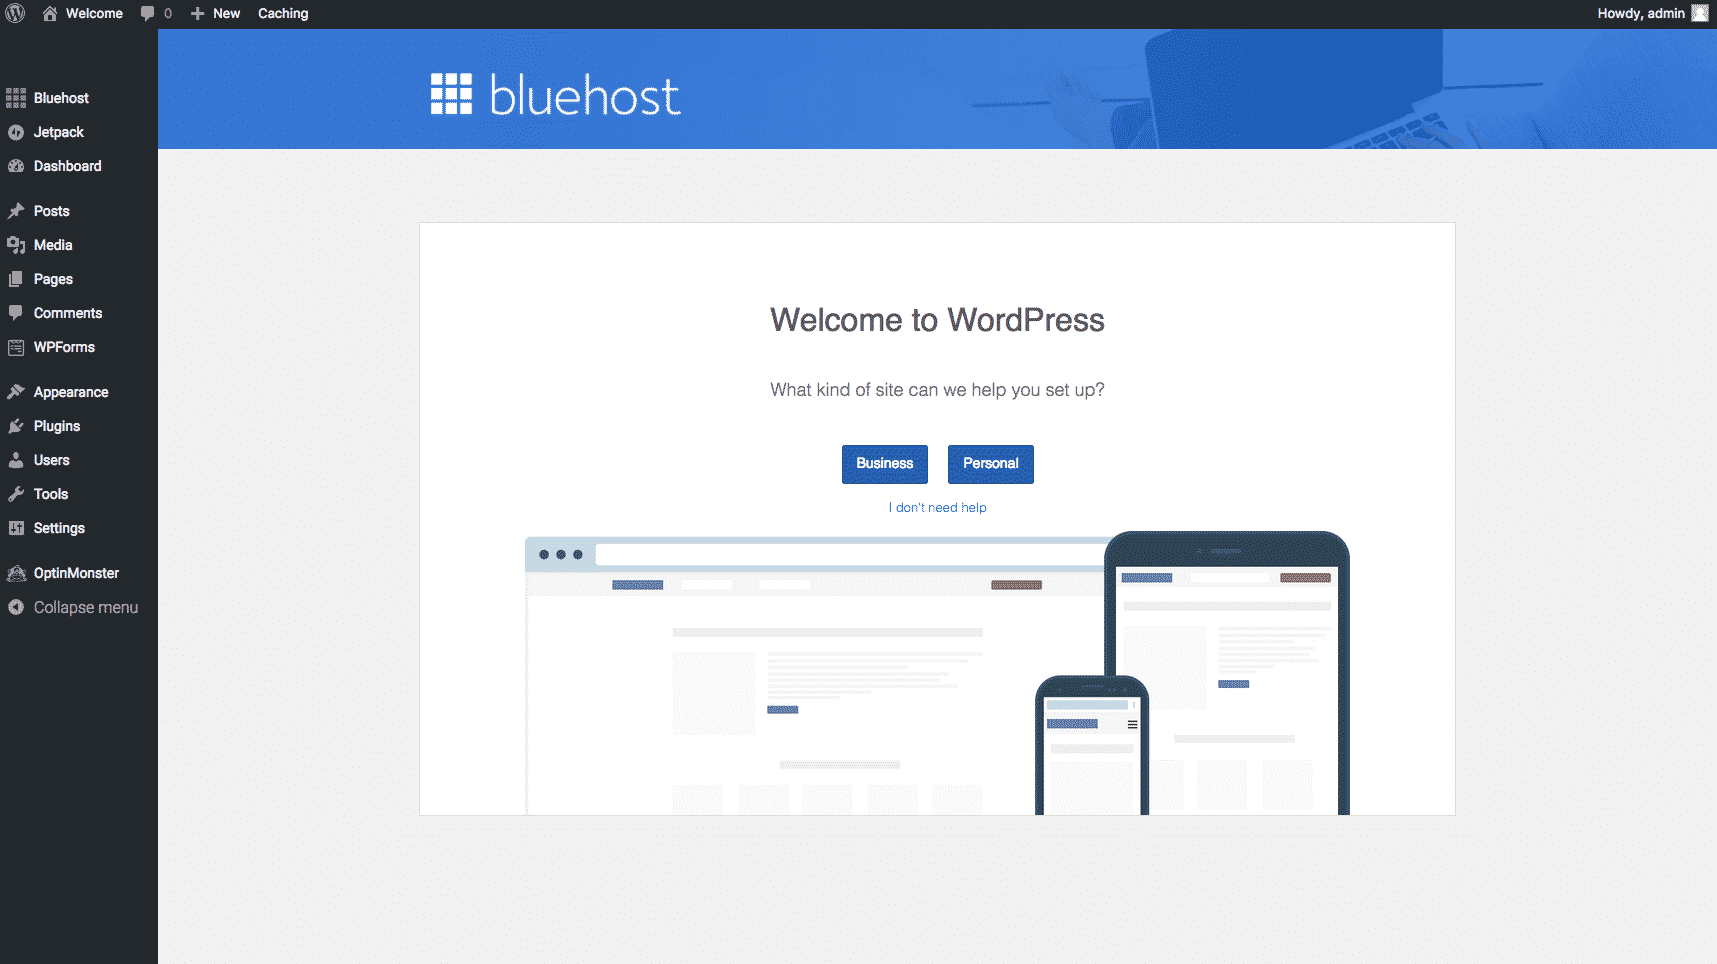 Bluehost welcome to wordpress screenshot